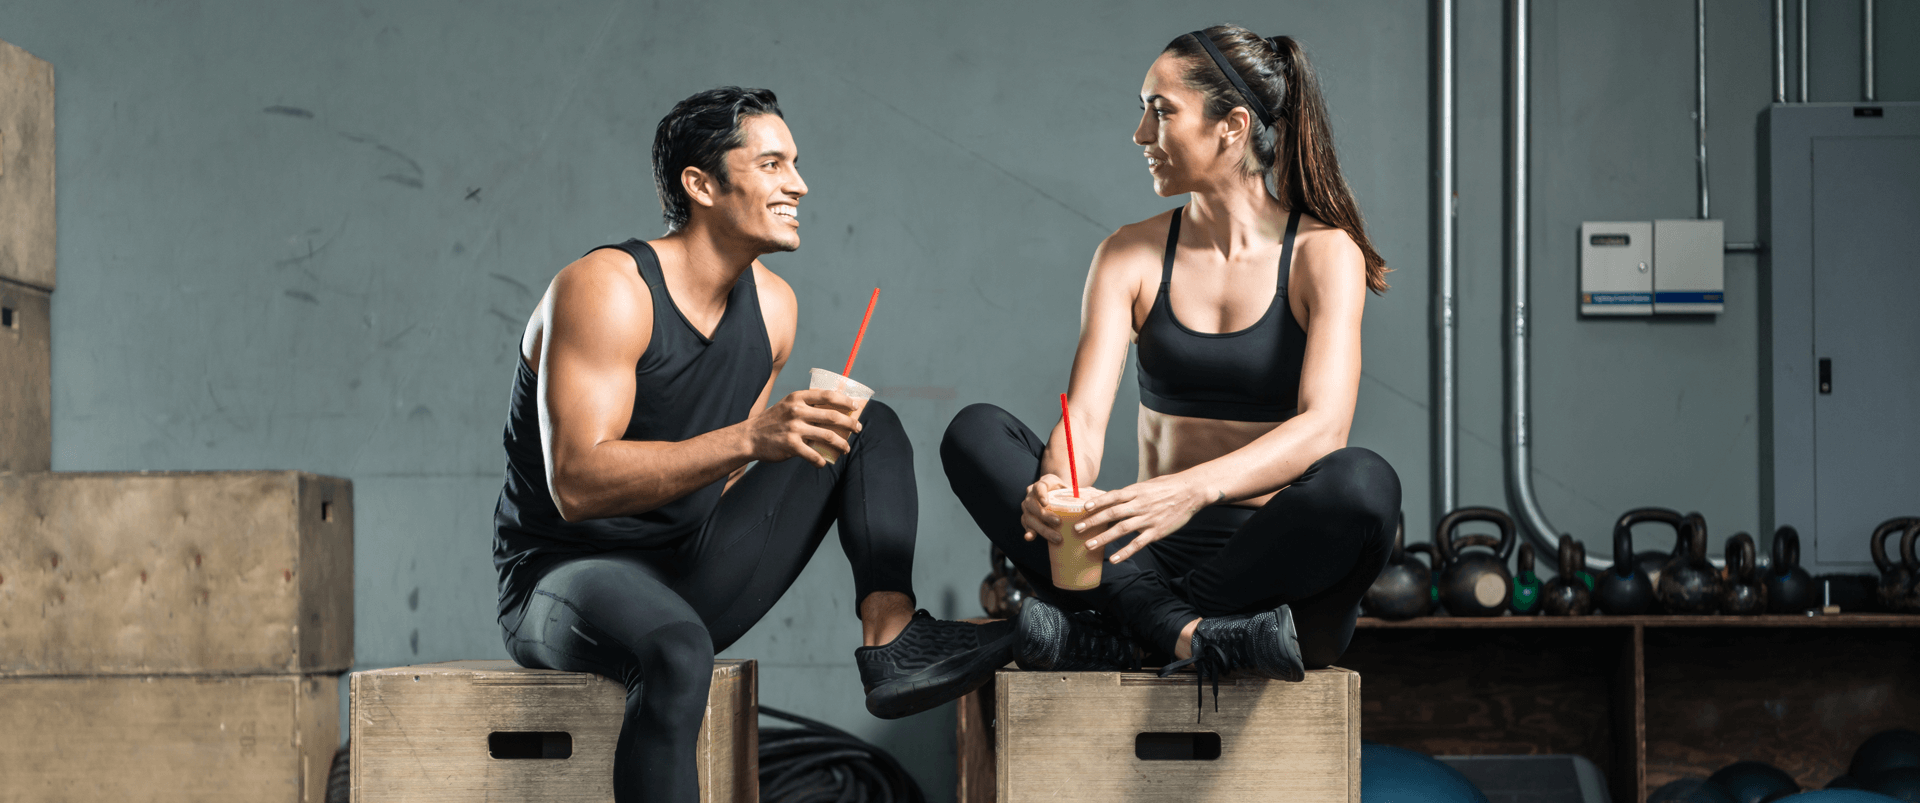 friends-drink-shake-in-gym